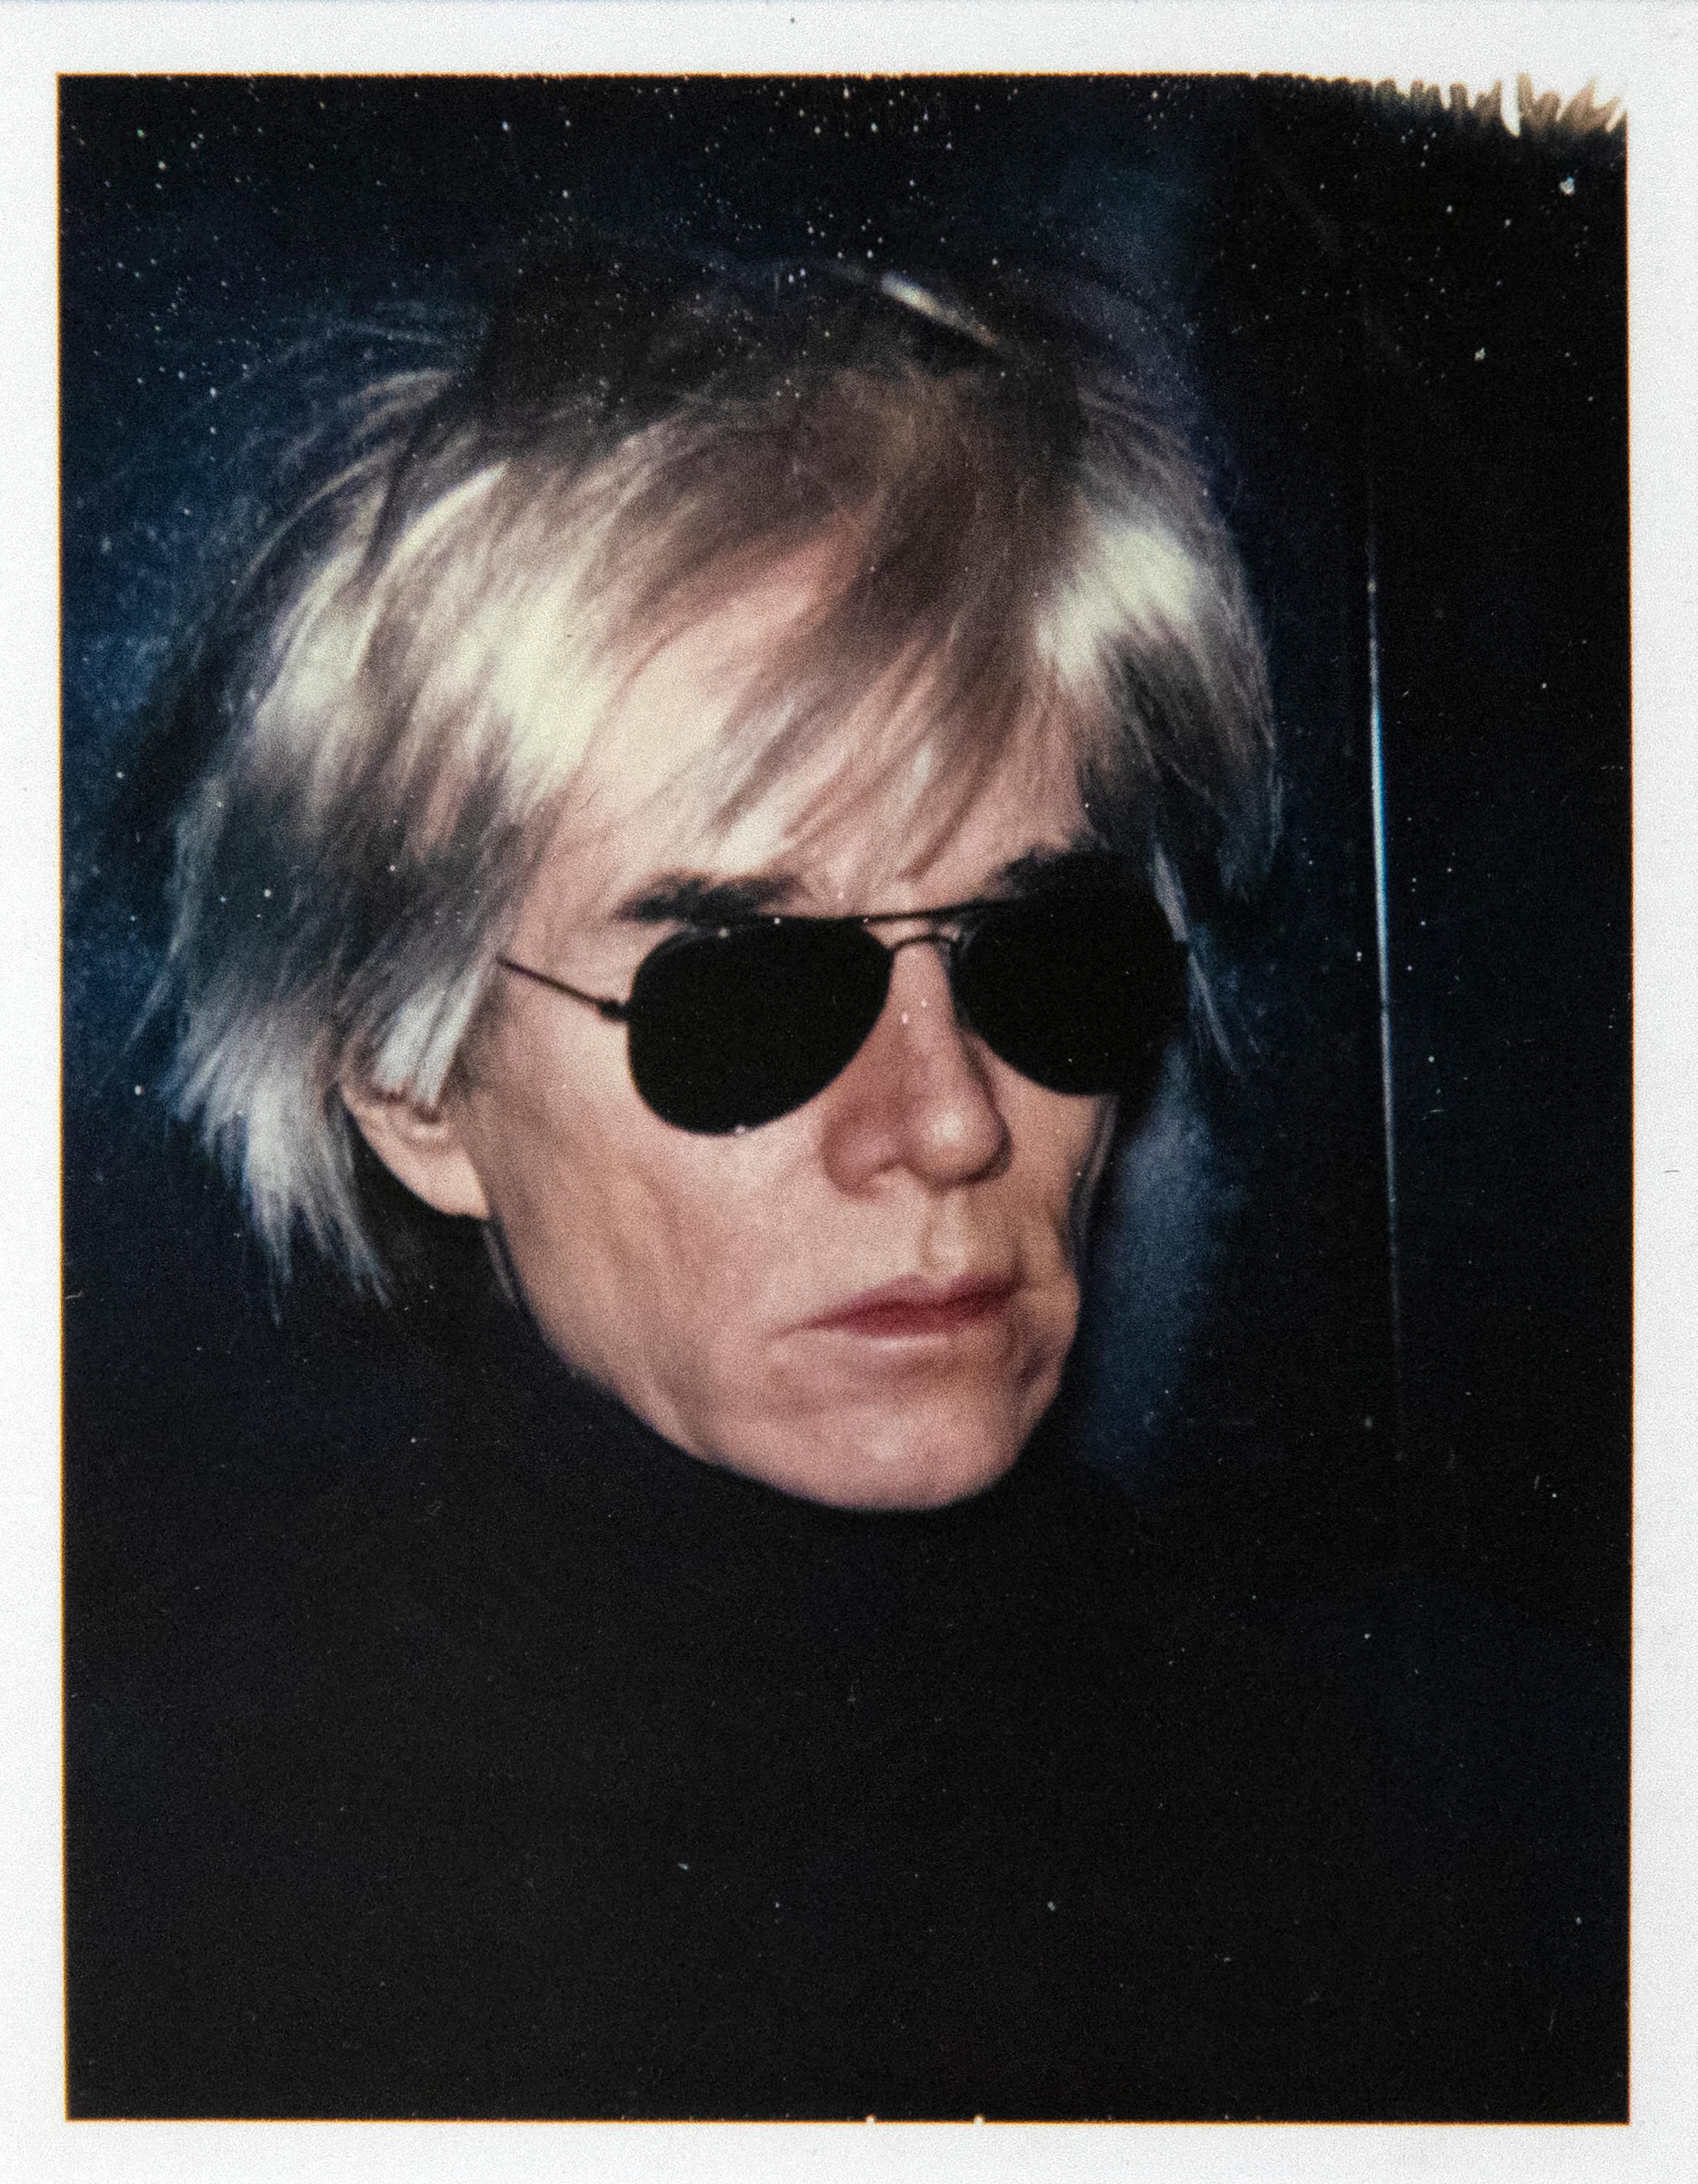 Portrait Photograph Andy Warhol - Self-Portrait dans Fright Wig